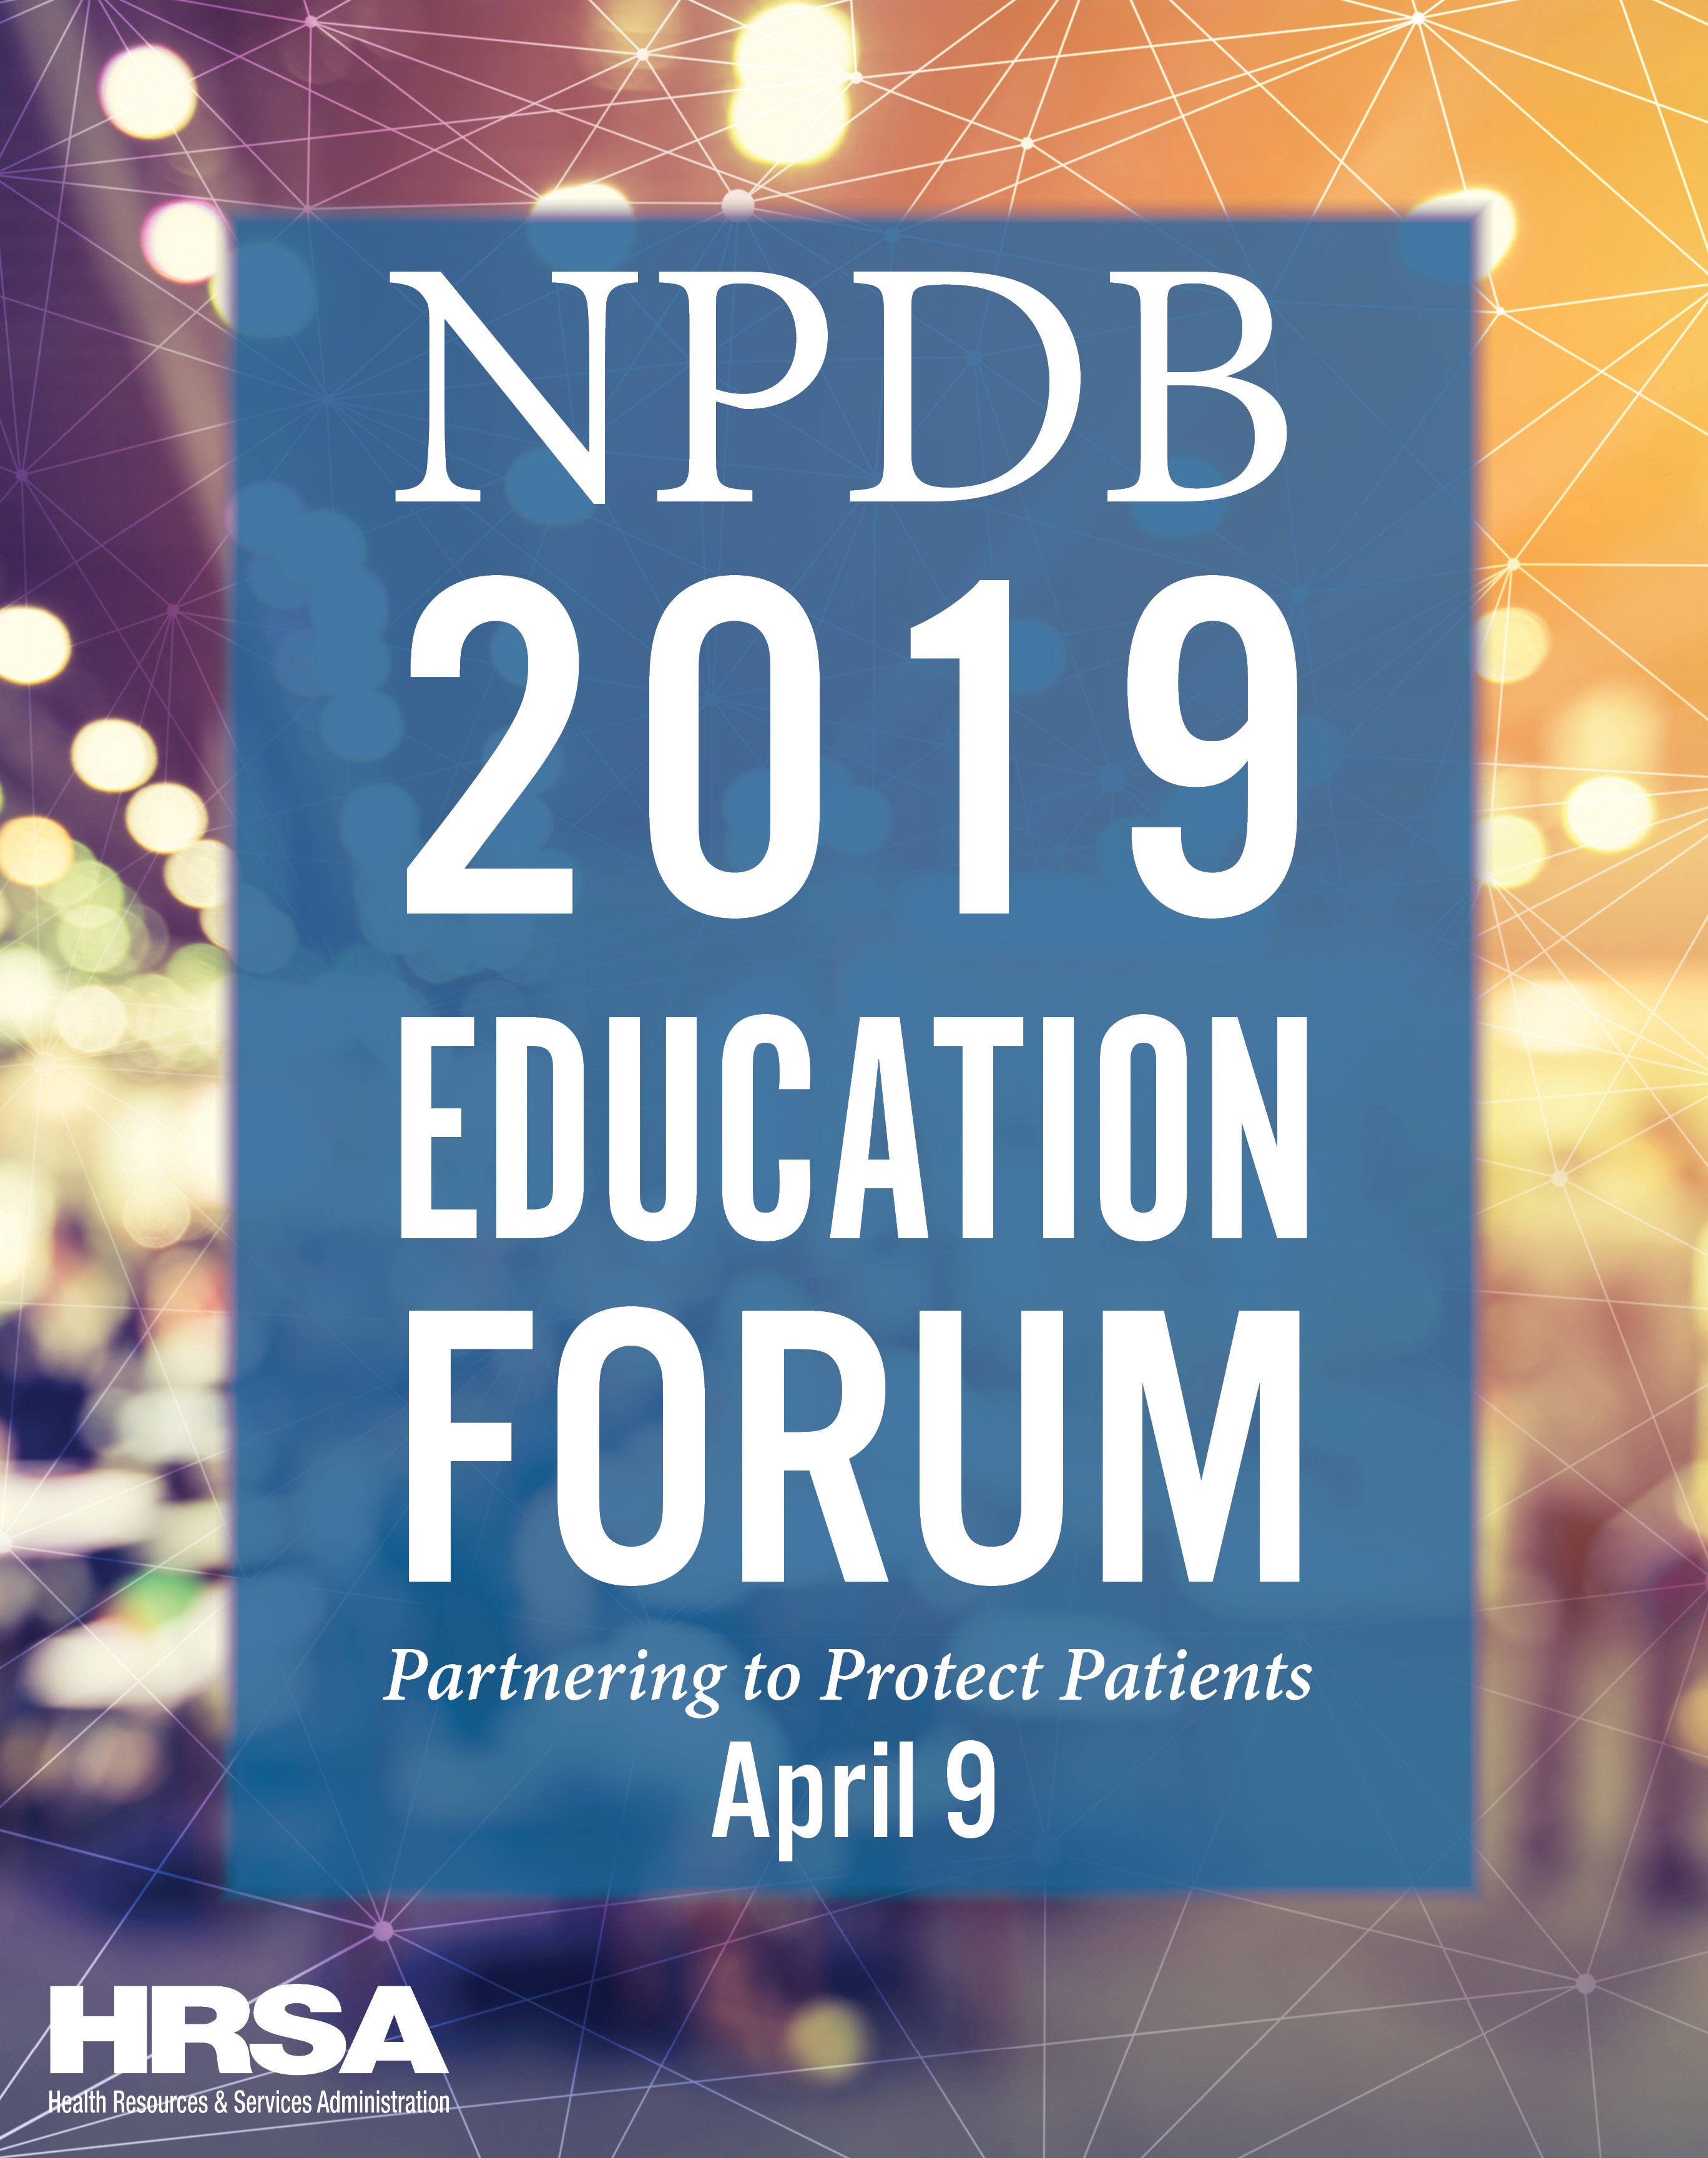 NPDB 2019 Education Forum - April 9, 2018 - HRSA